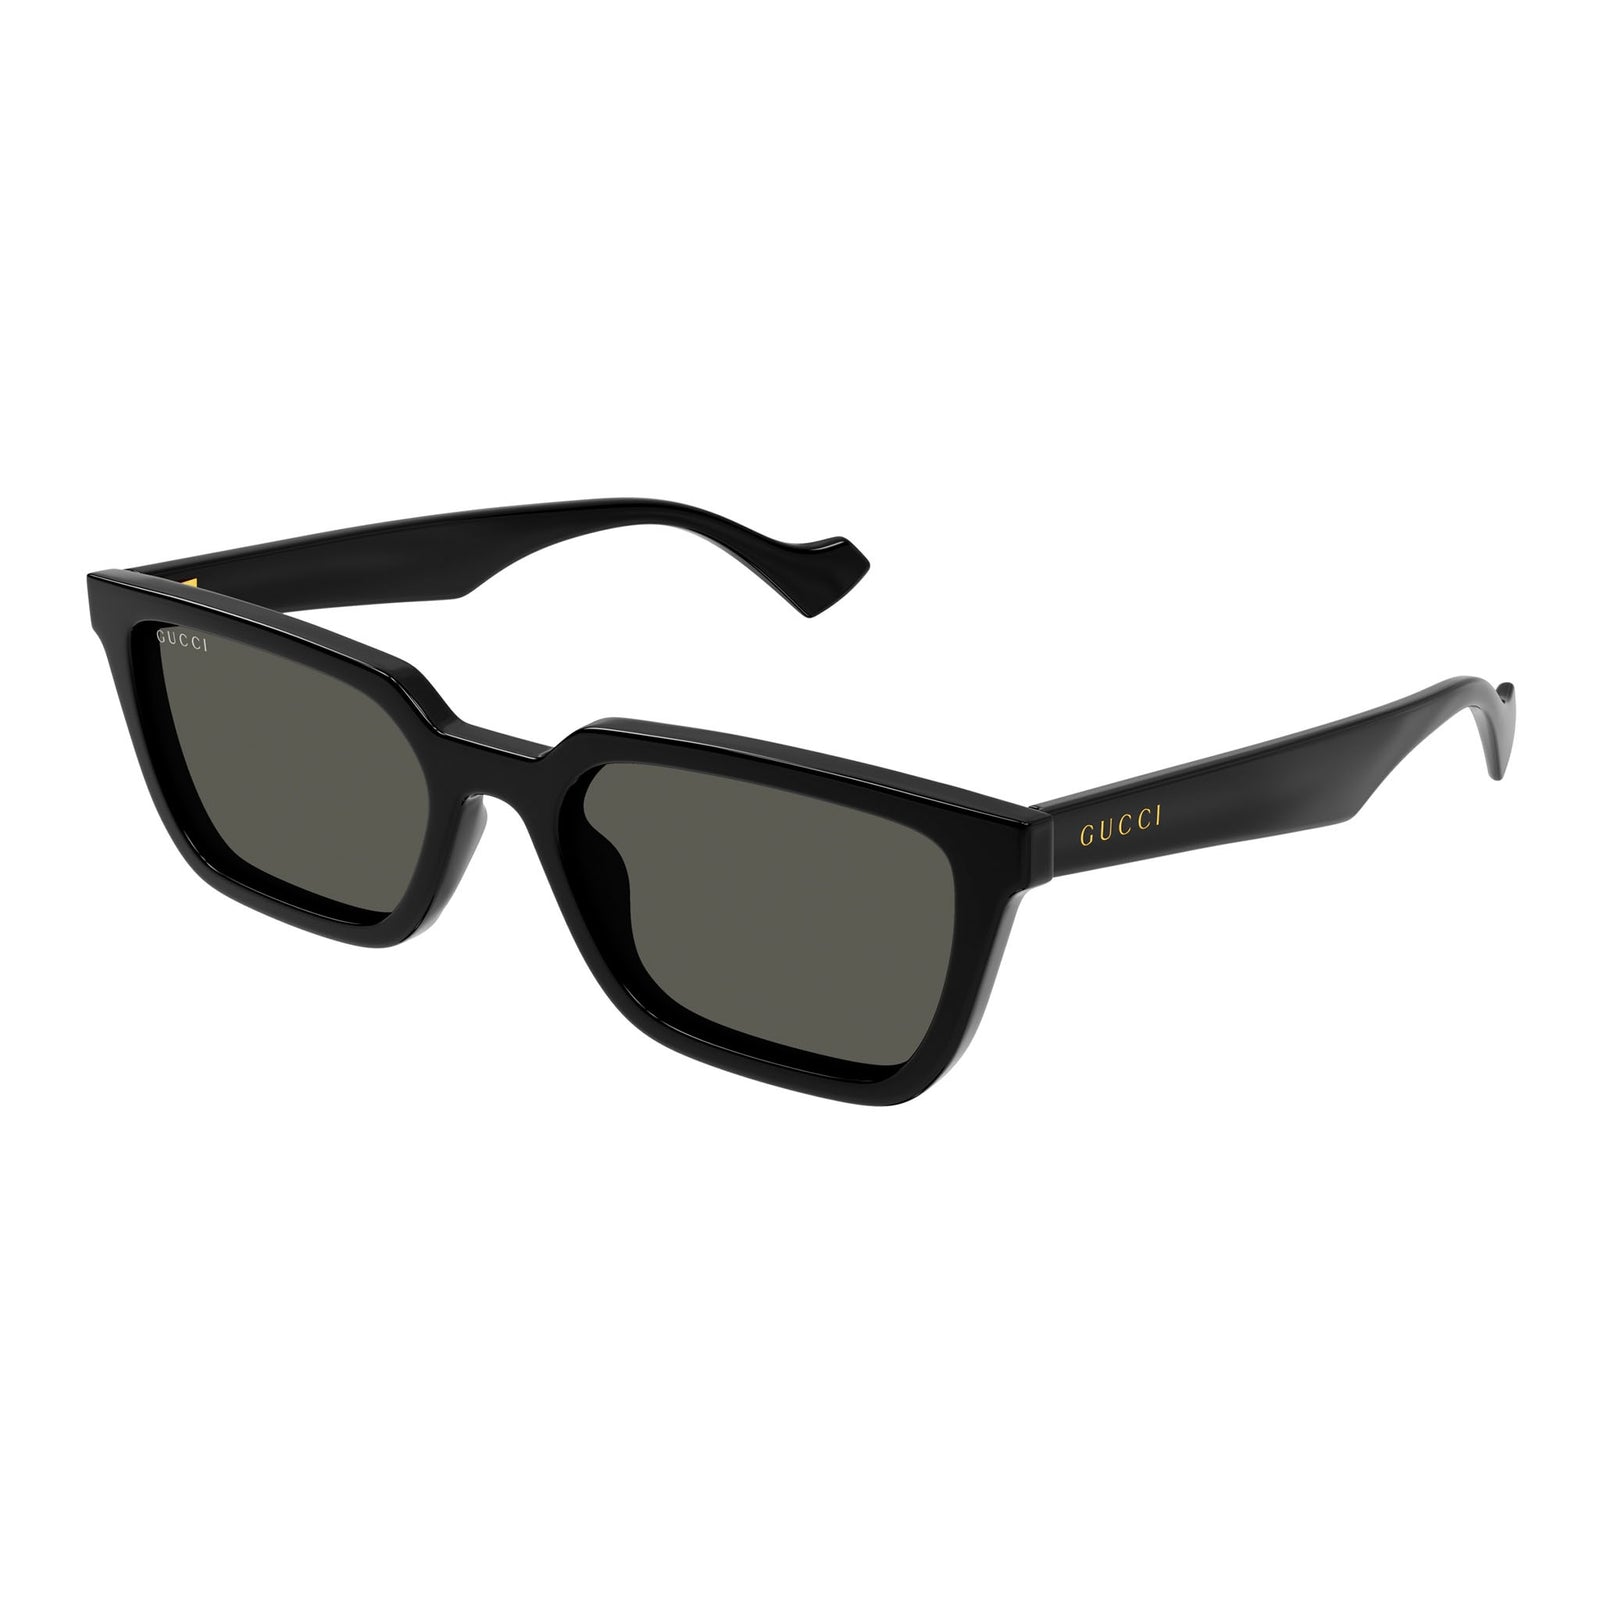 Gucci UNISEX - Sunglasses - black/grey/black - Zalando.co.uk